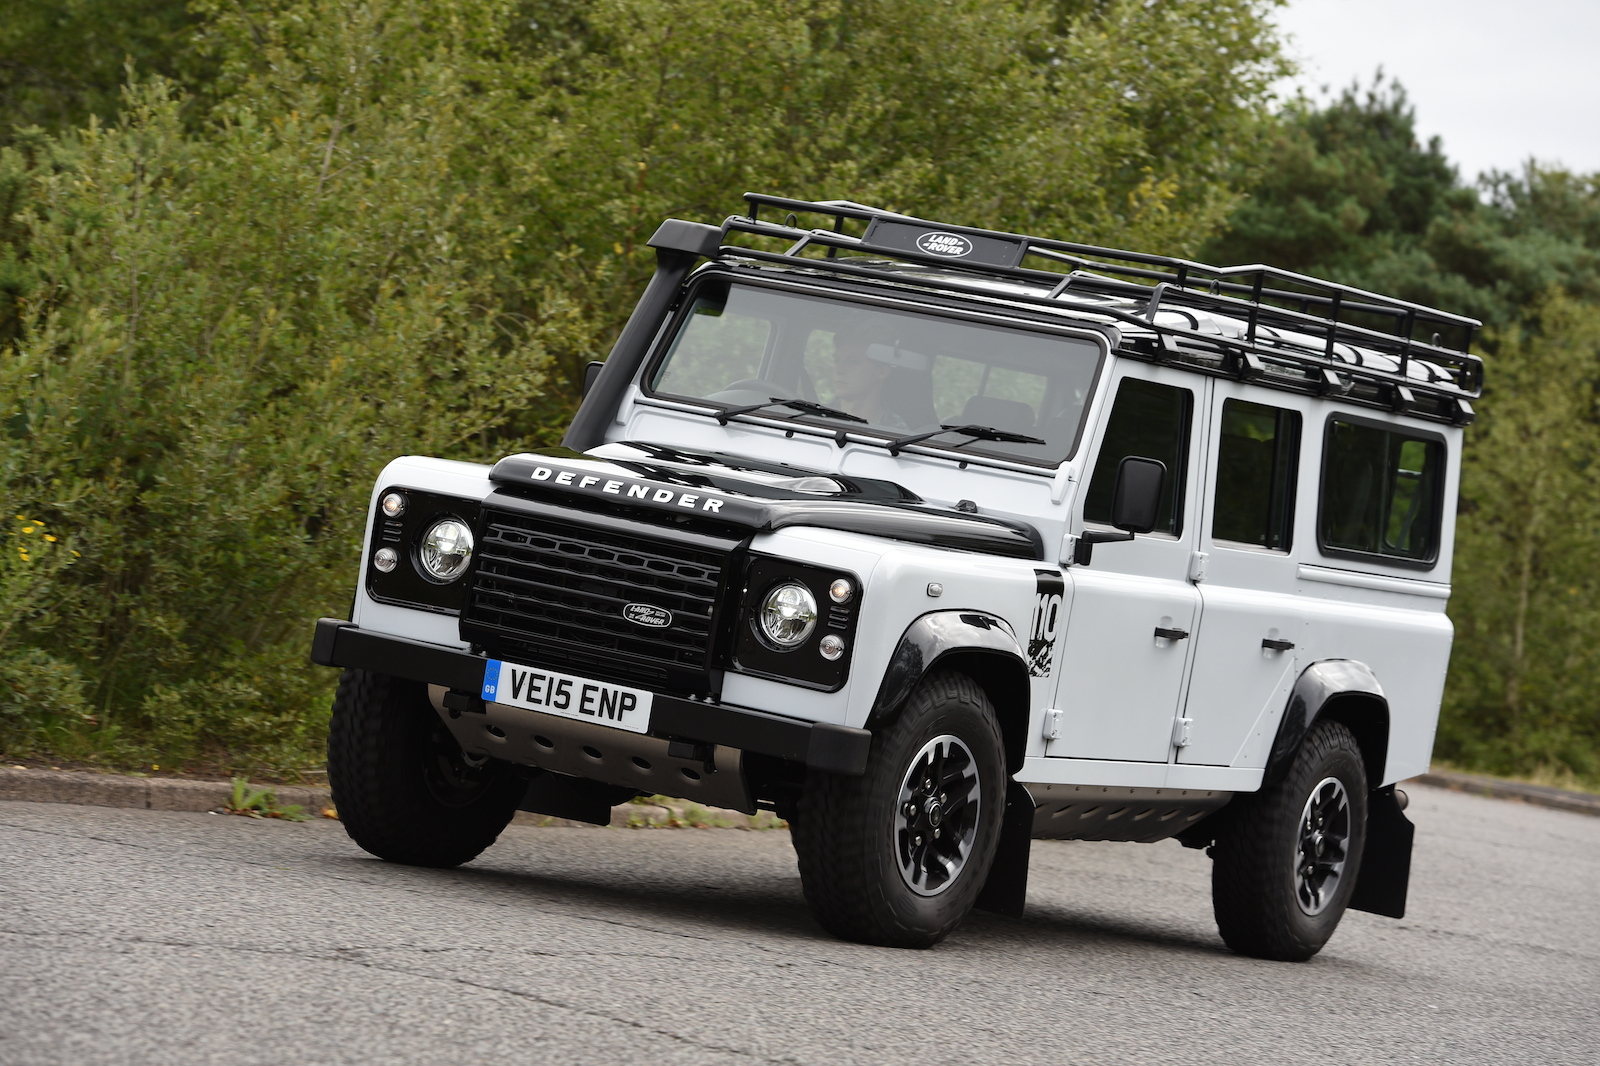 2015 Land Rover Defender 110 Adventure UK review | Autocar